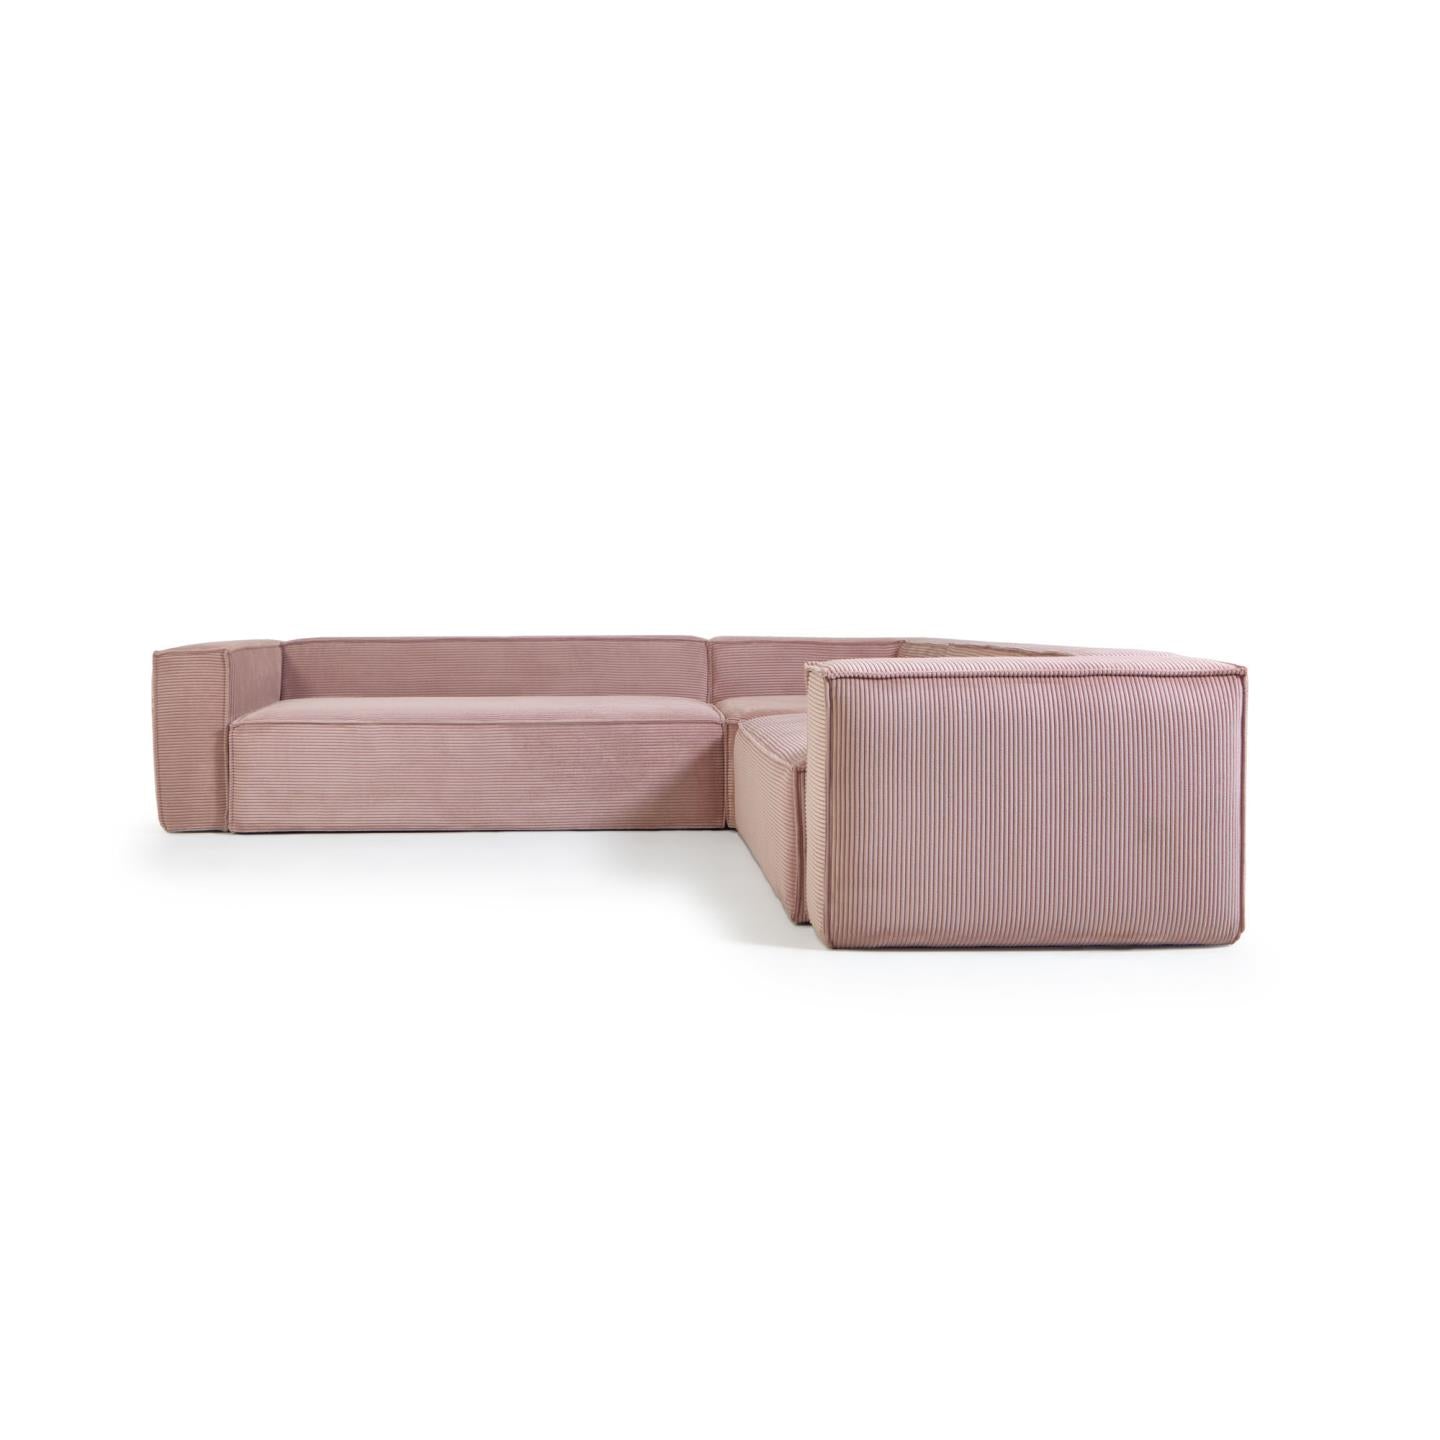 Blok 5 seater corner sofa in pink wide seam corduroy, 320 x 290 / 290 x 320 cm